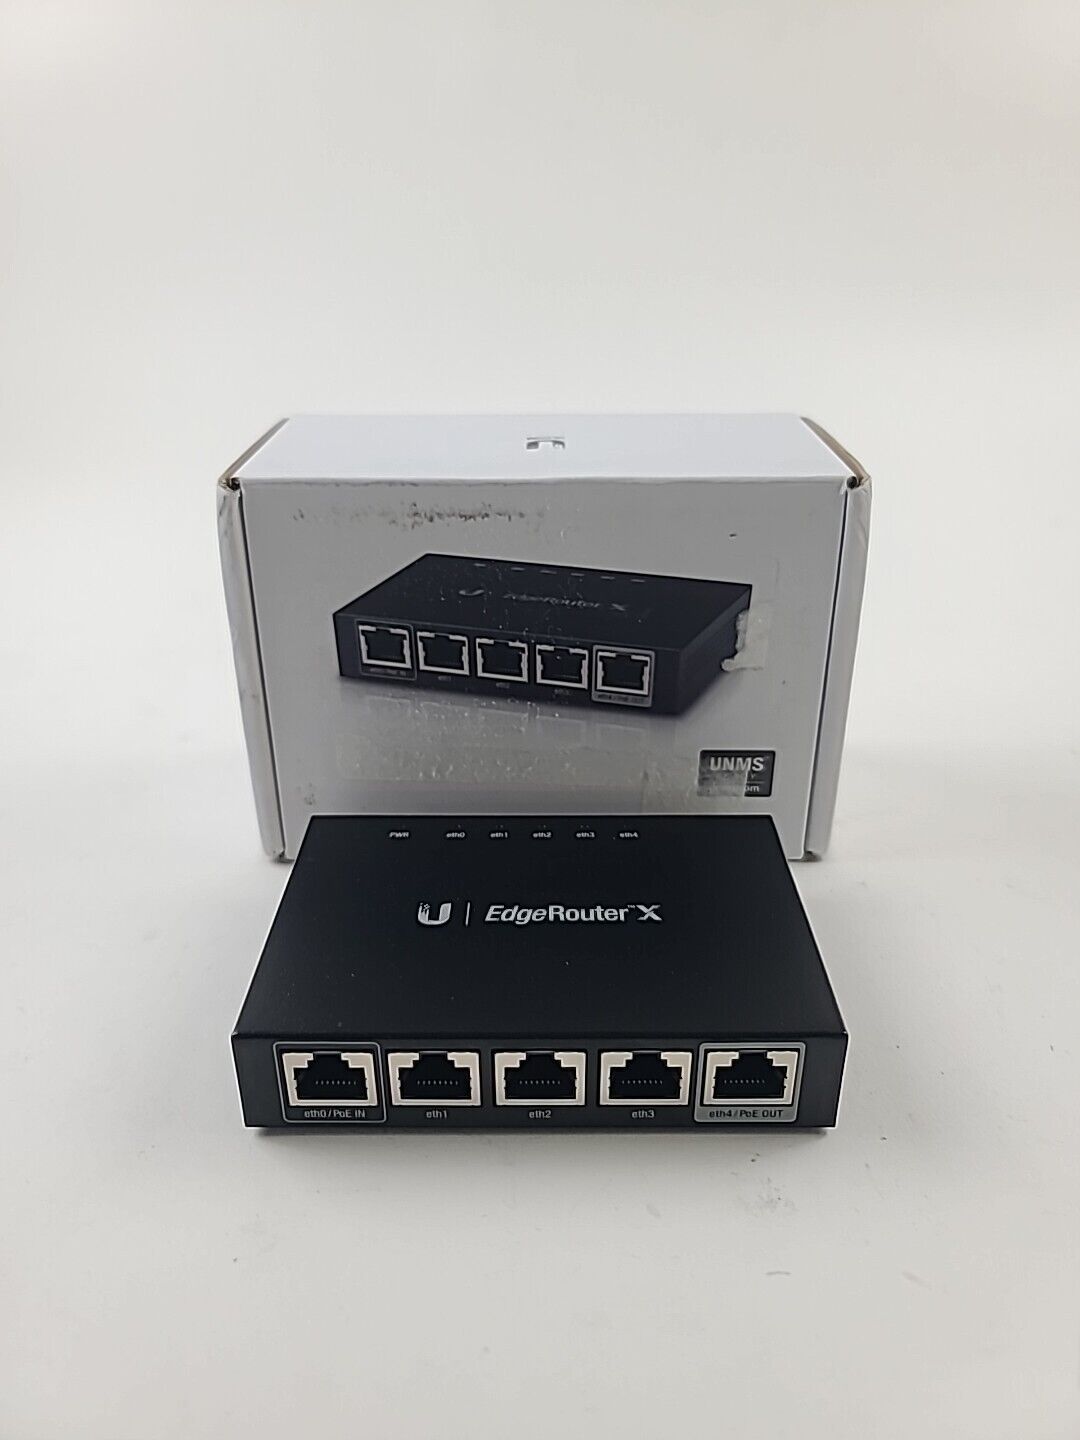 Ubiquiti Networks ER-X EdgeRouter X 5-Port Gigabit Wired Router